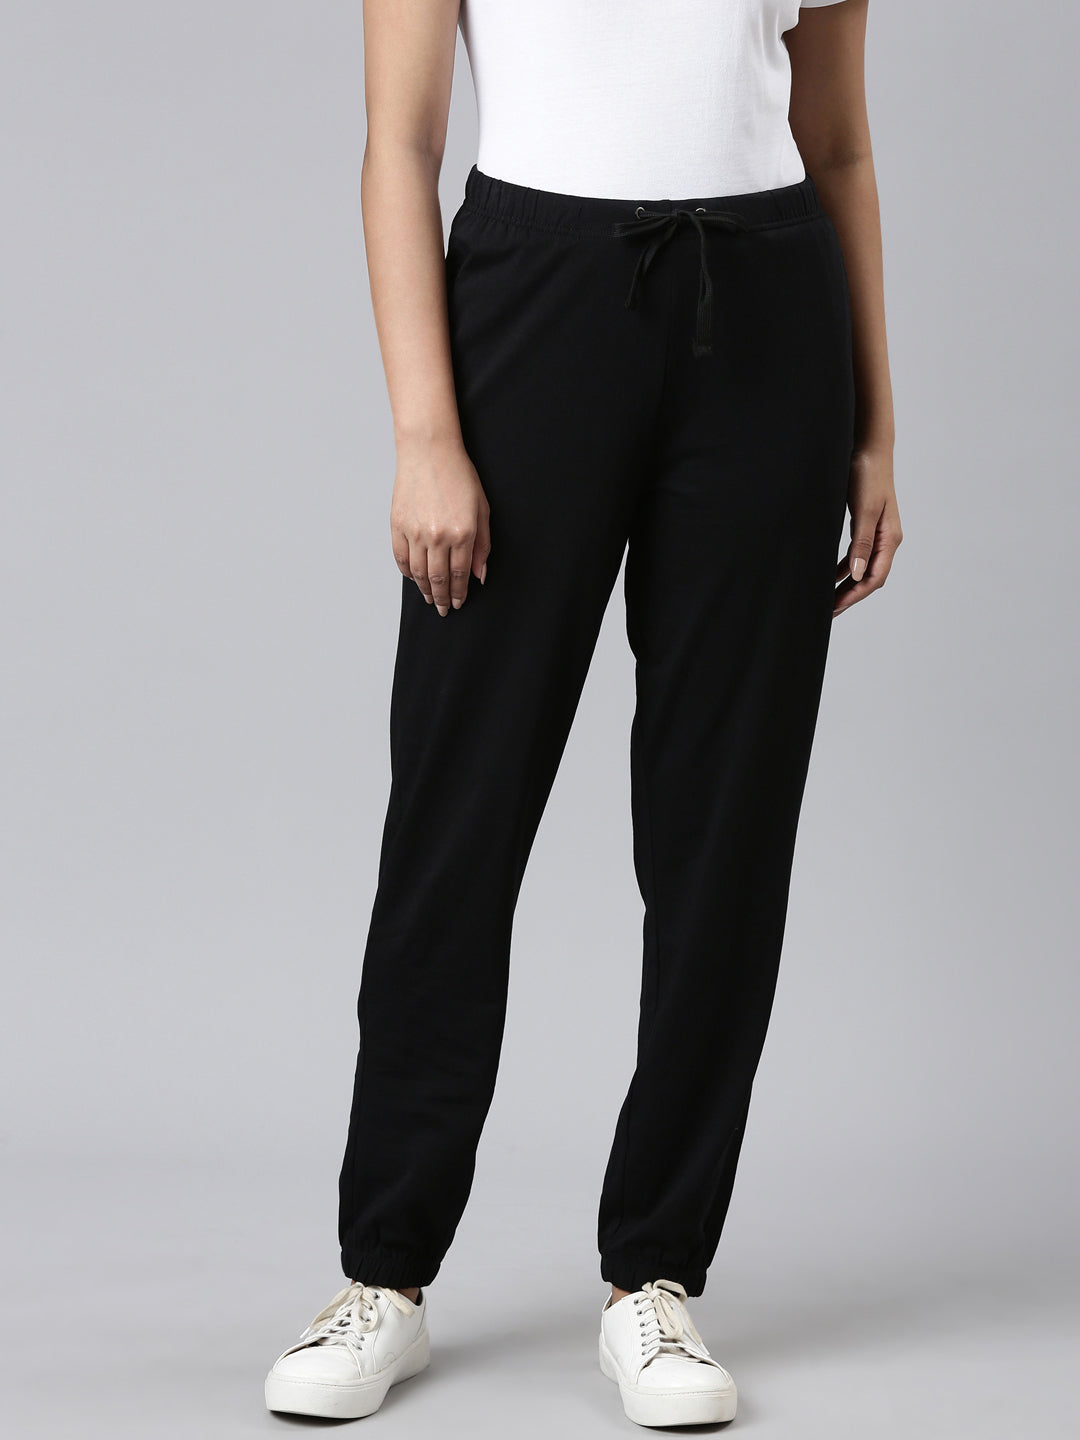 Gcvizuso Womens Black Sweatpants Women's Solid Cotton Linen